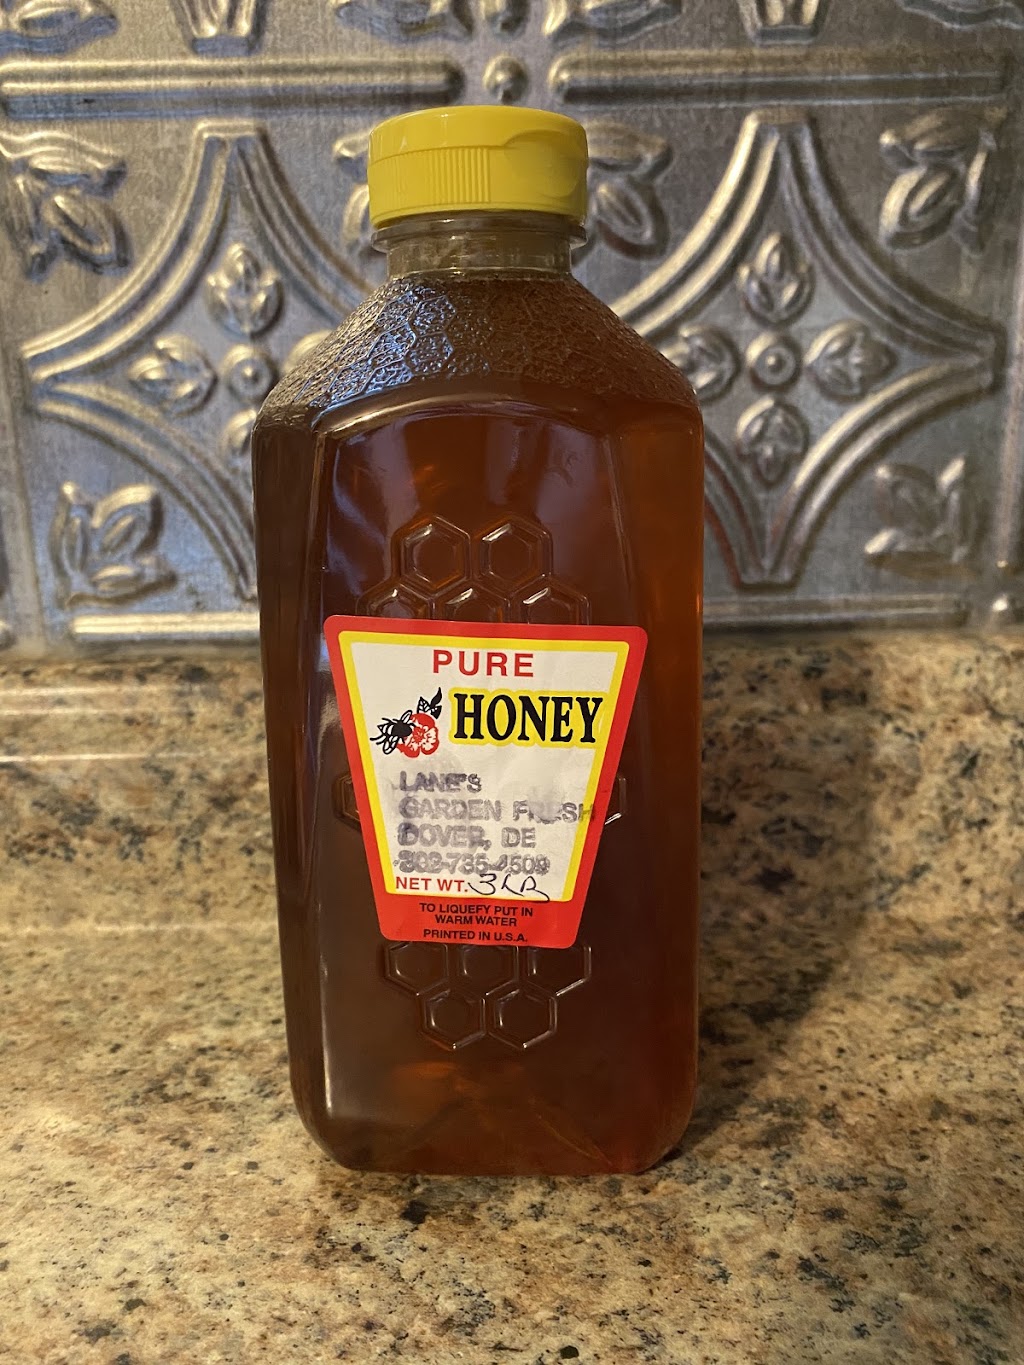 Honey dover | 844 Main St, Dover, DE 19901 | Phone: (302) 735-4509